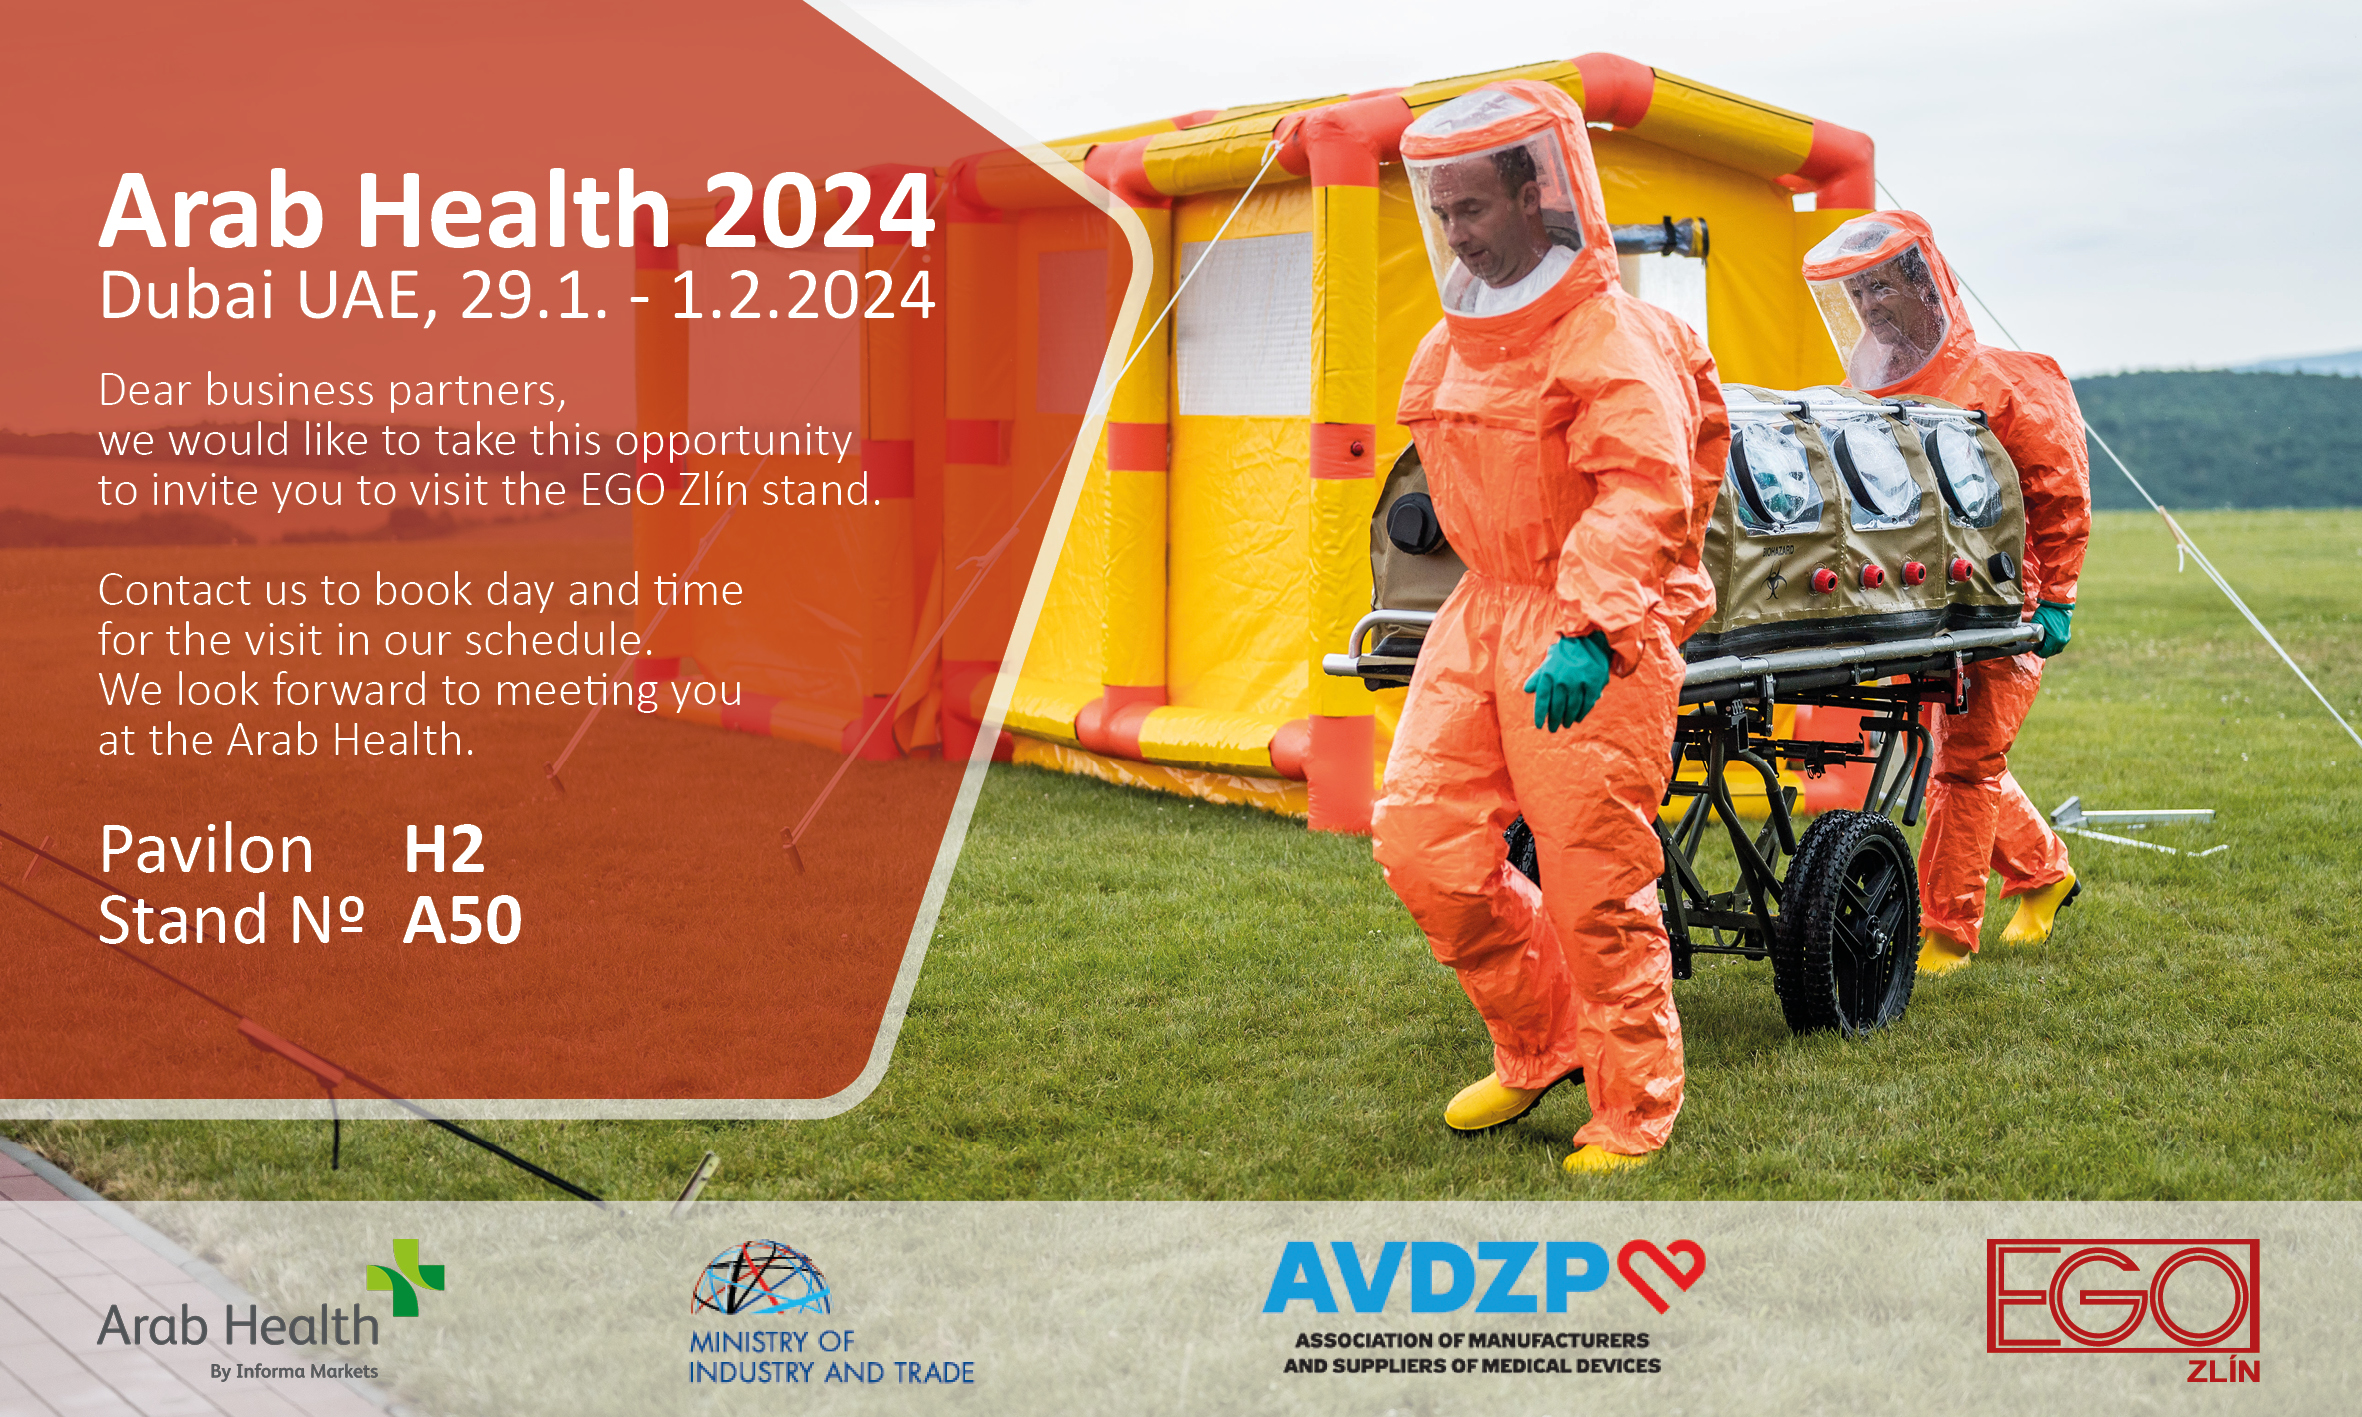 Arab Health 2024, Dubai UAE, 29. 1. - 1. 2. 2024